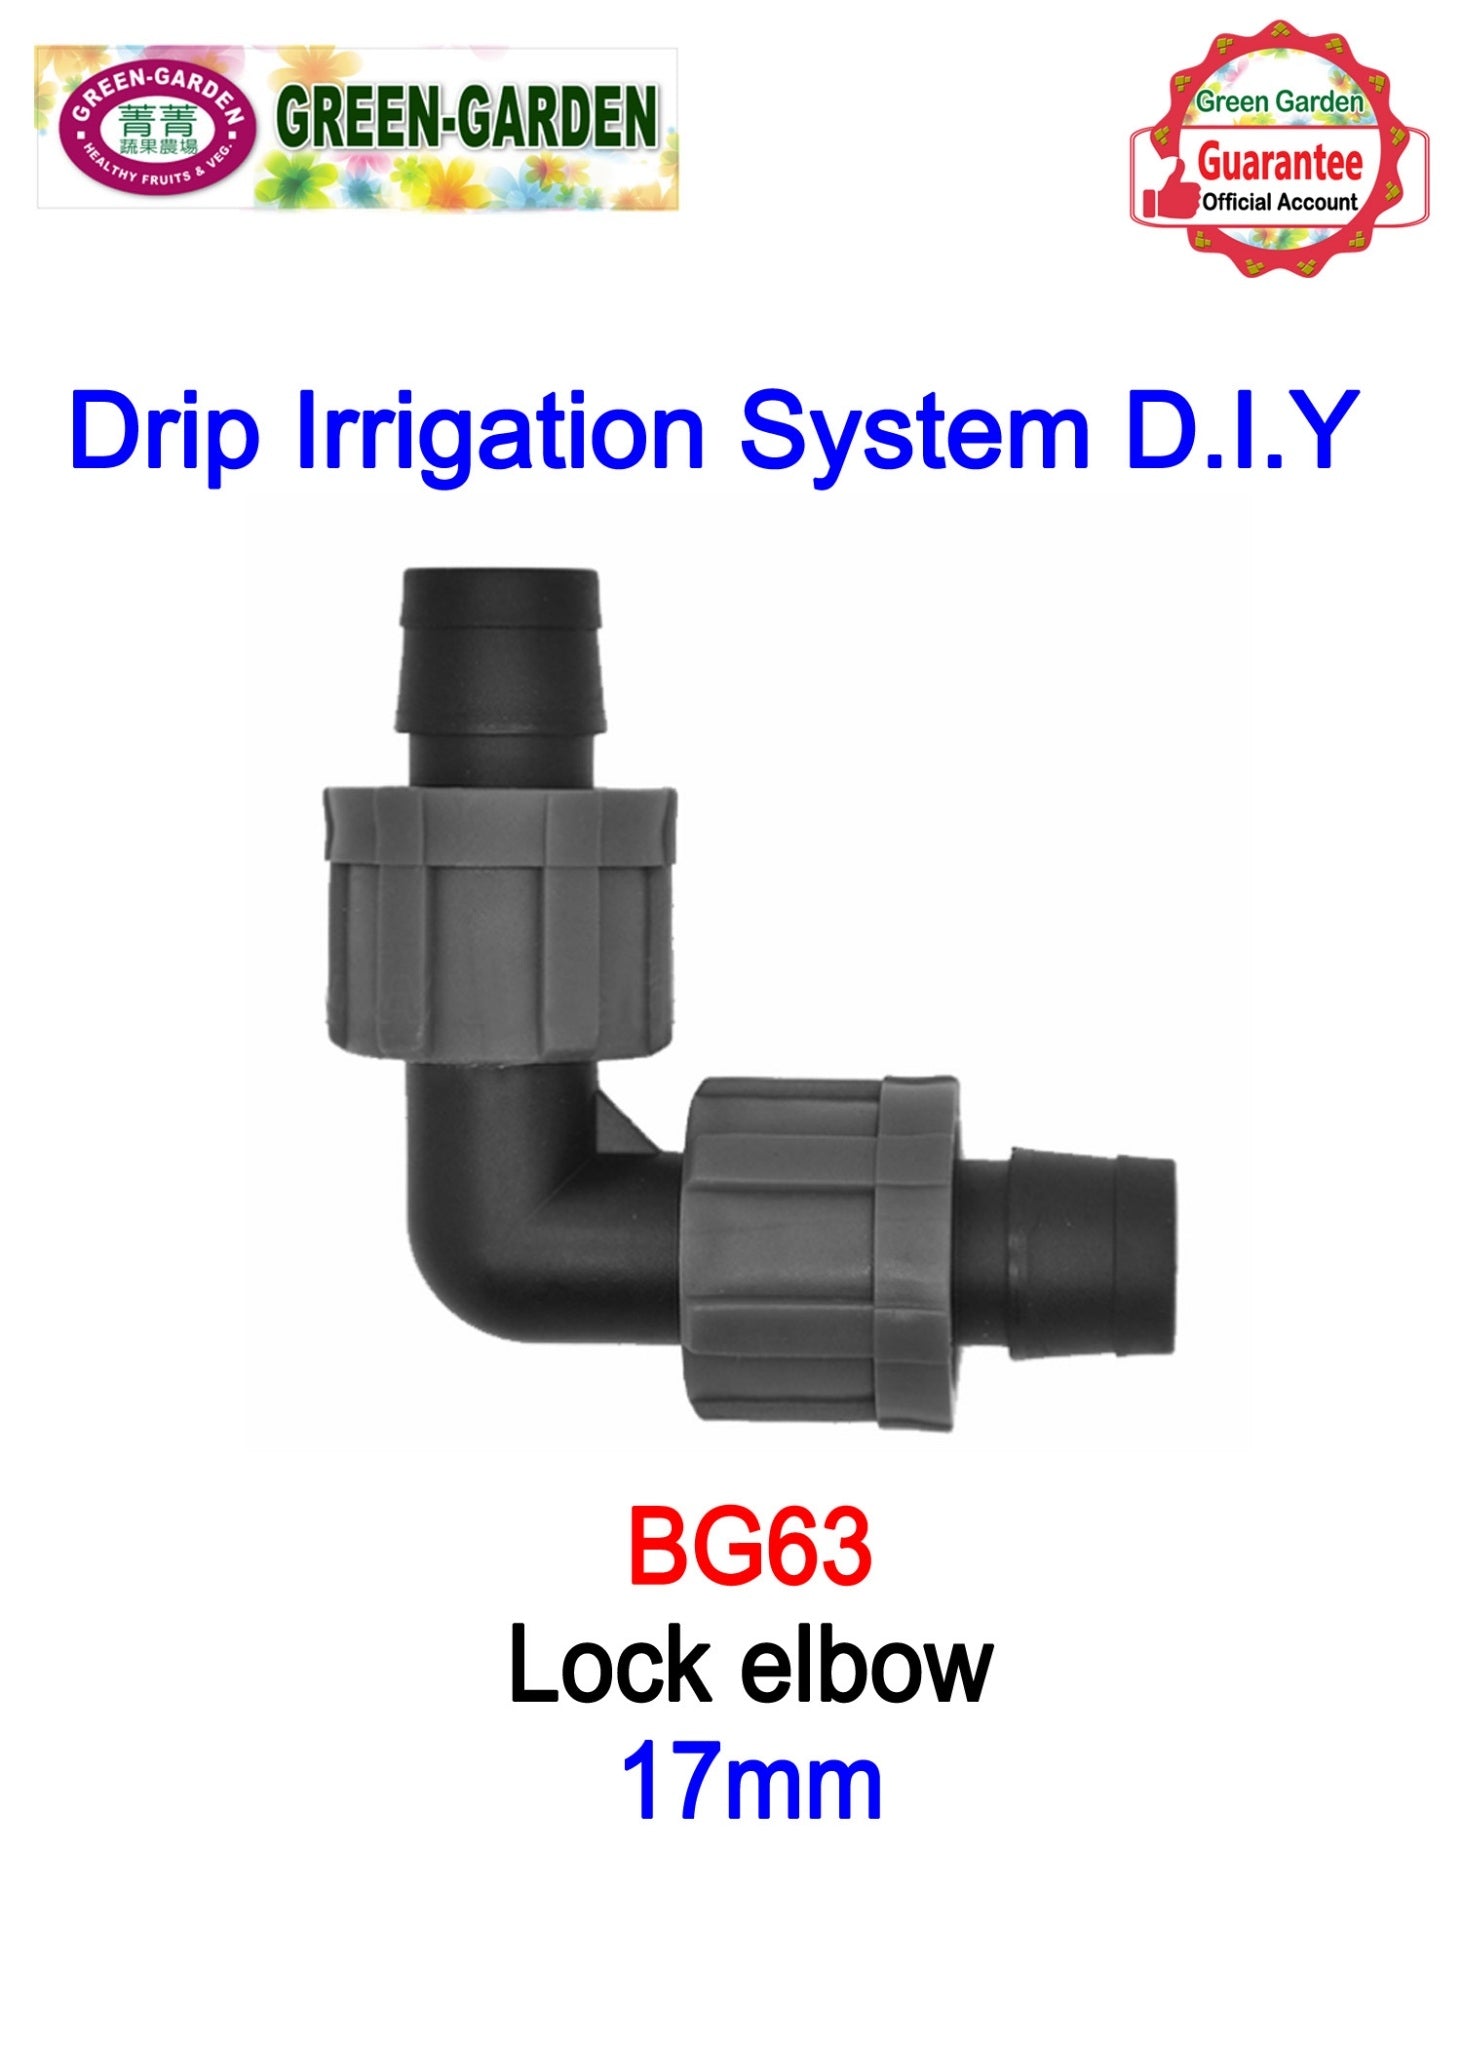 Drip Irrigation System - 17mm lock elbow BG63